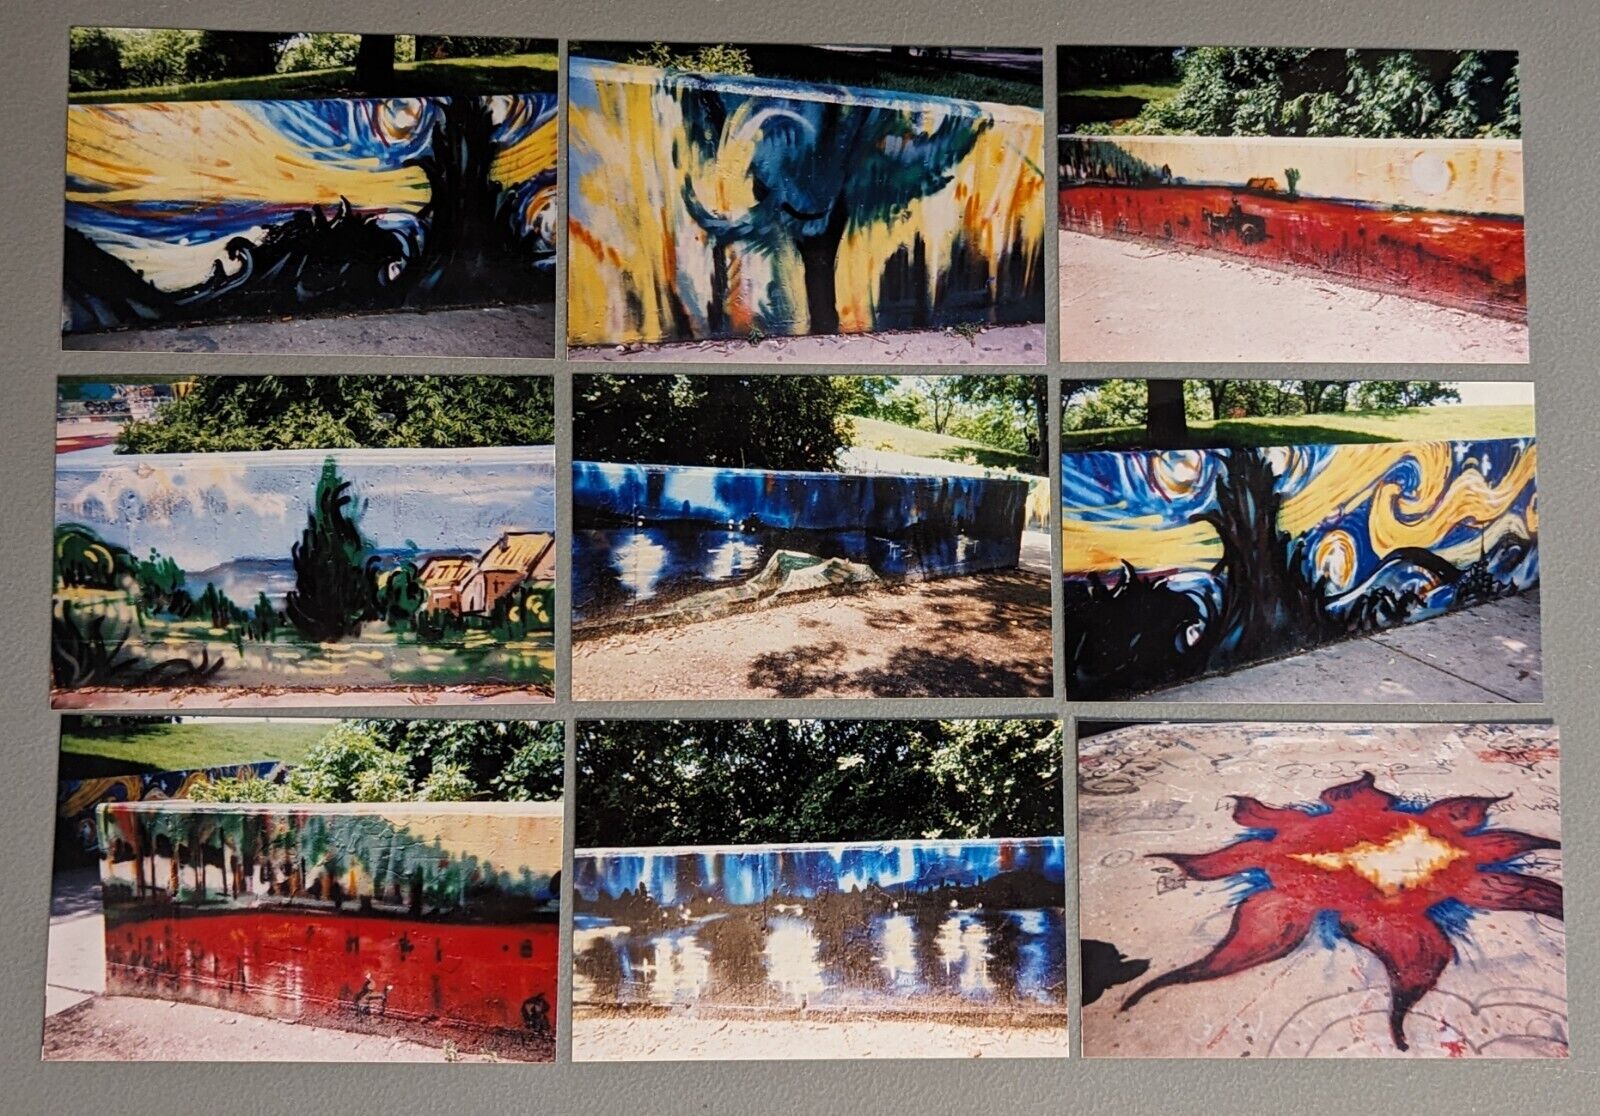 VTG Found Photos (9) - Van Gogh Inspired Graffiti Art - Early 2000s Chicago Park